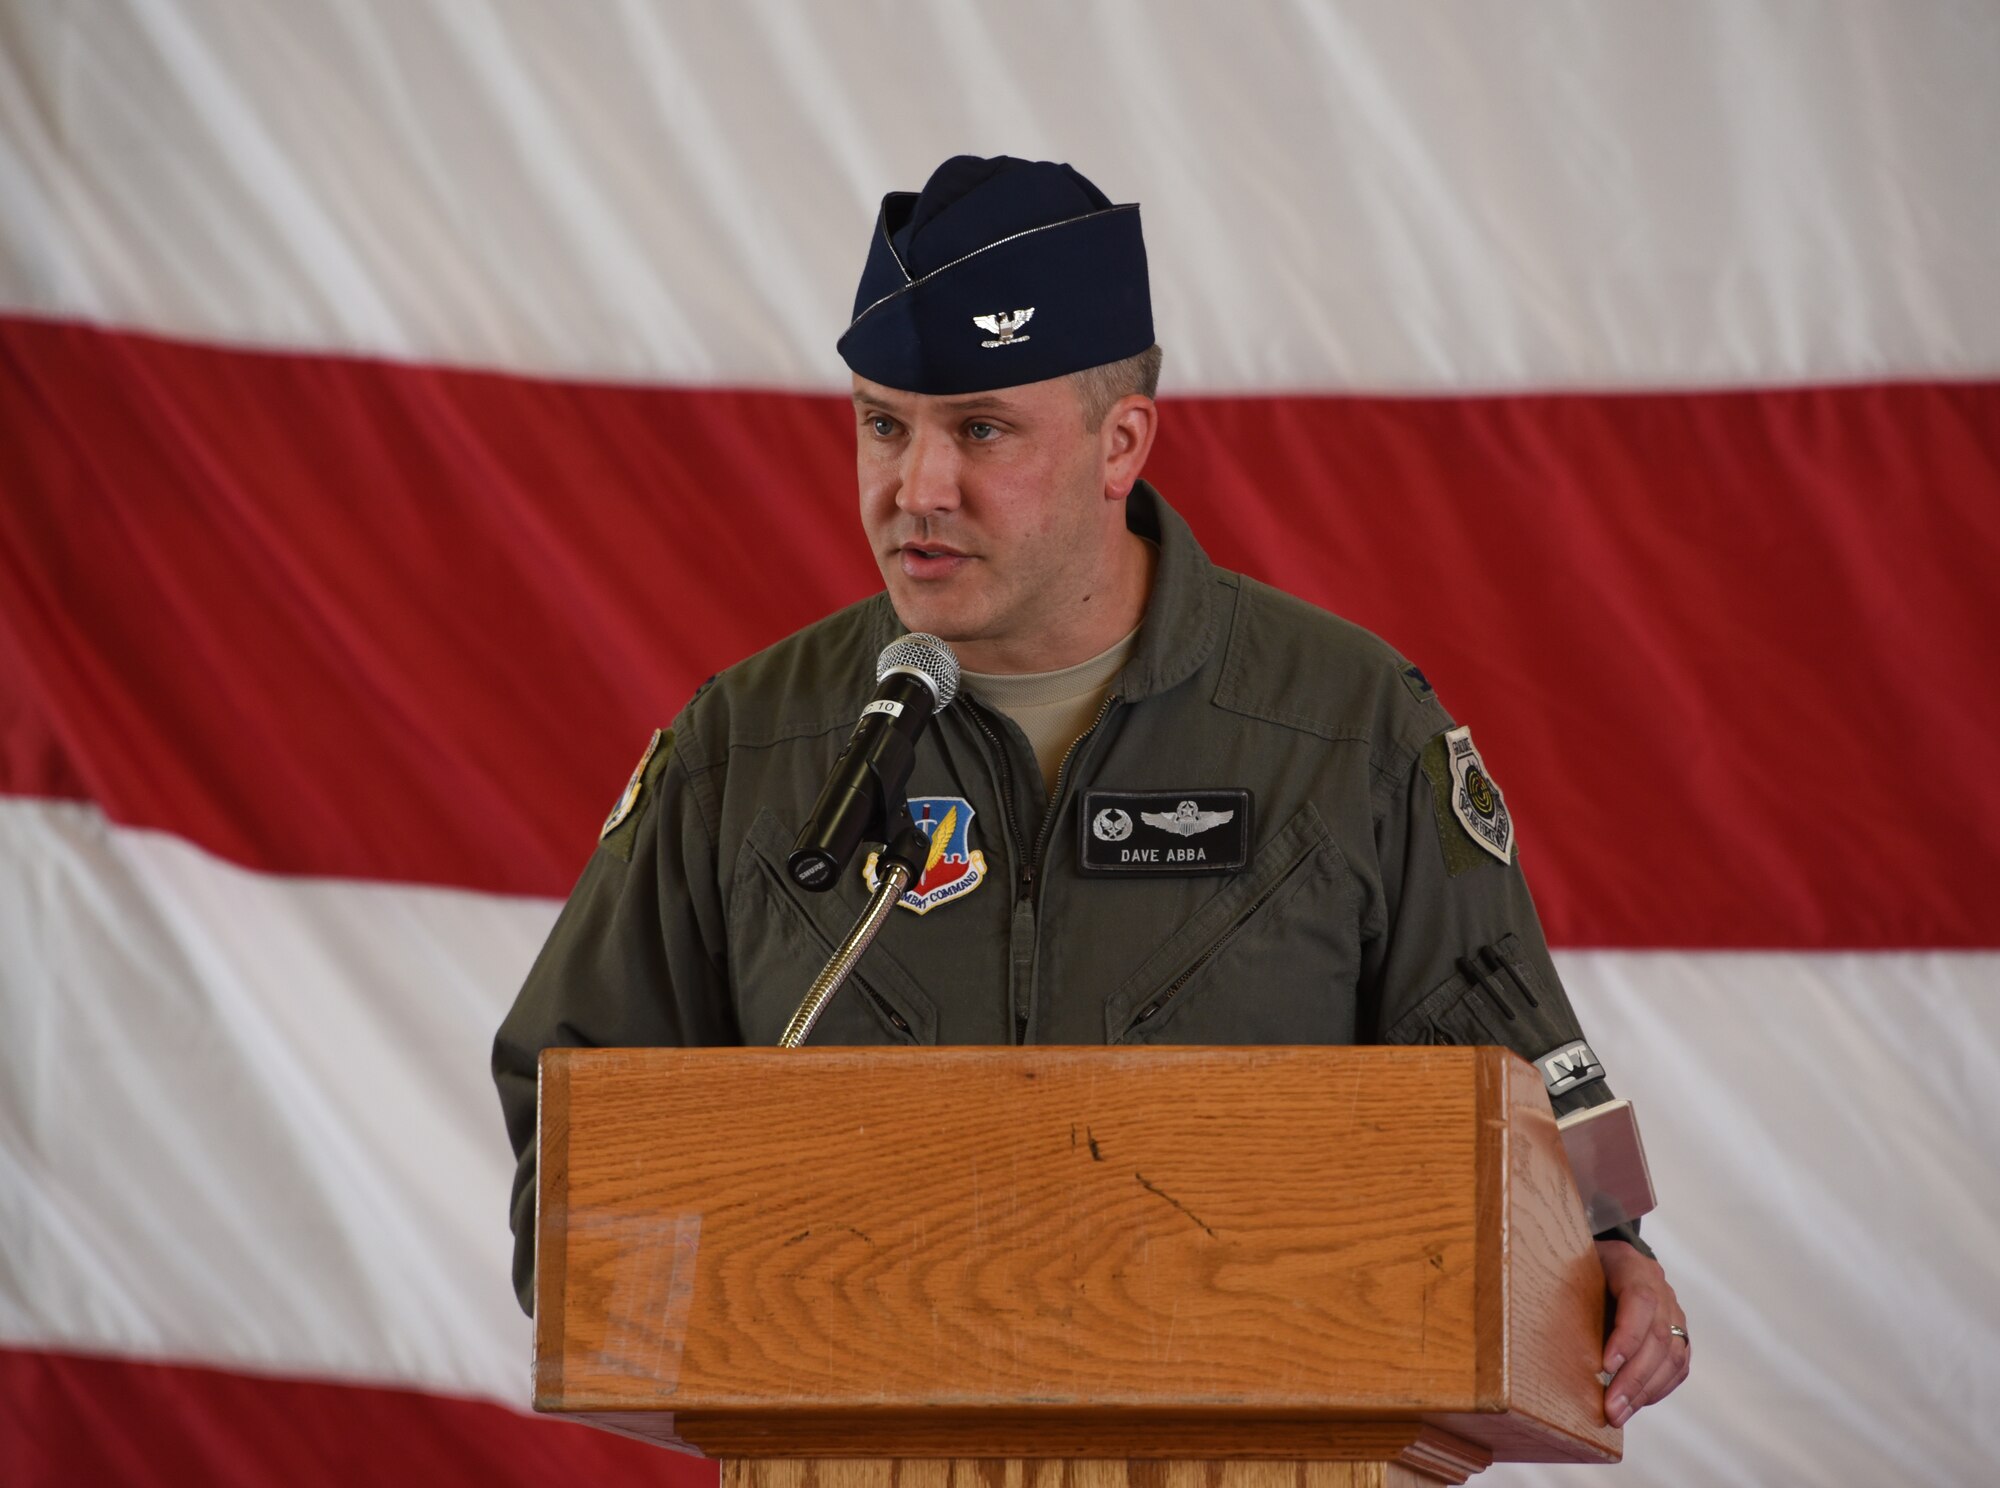 Commander speaking